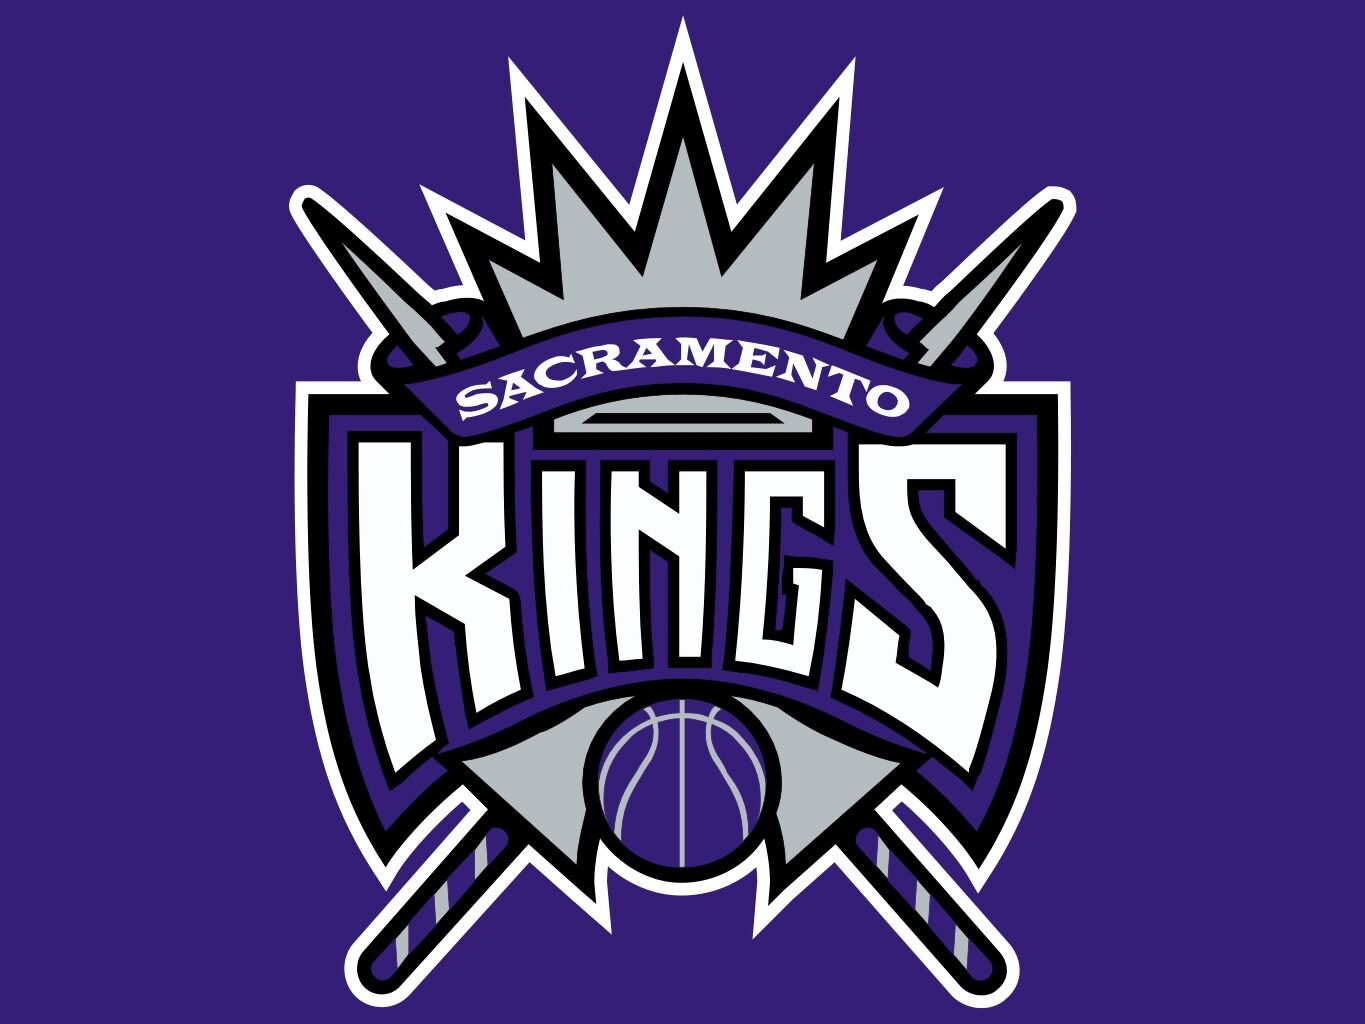 Sacramento Kings - Wikipedia